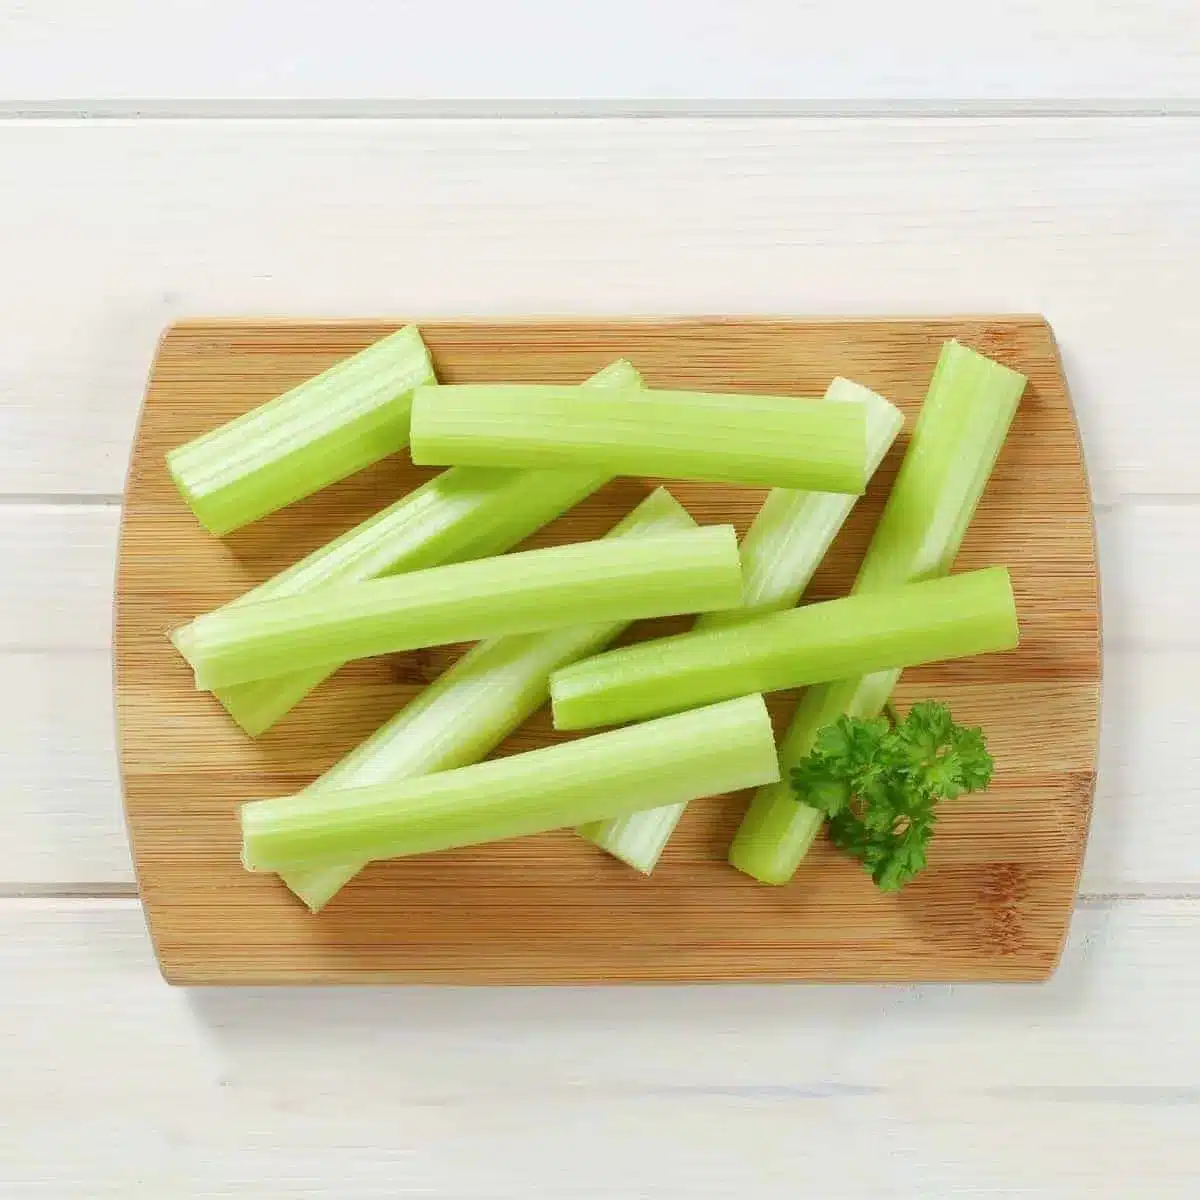 Celery sticks on a wooden cutting board.